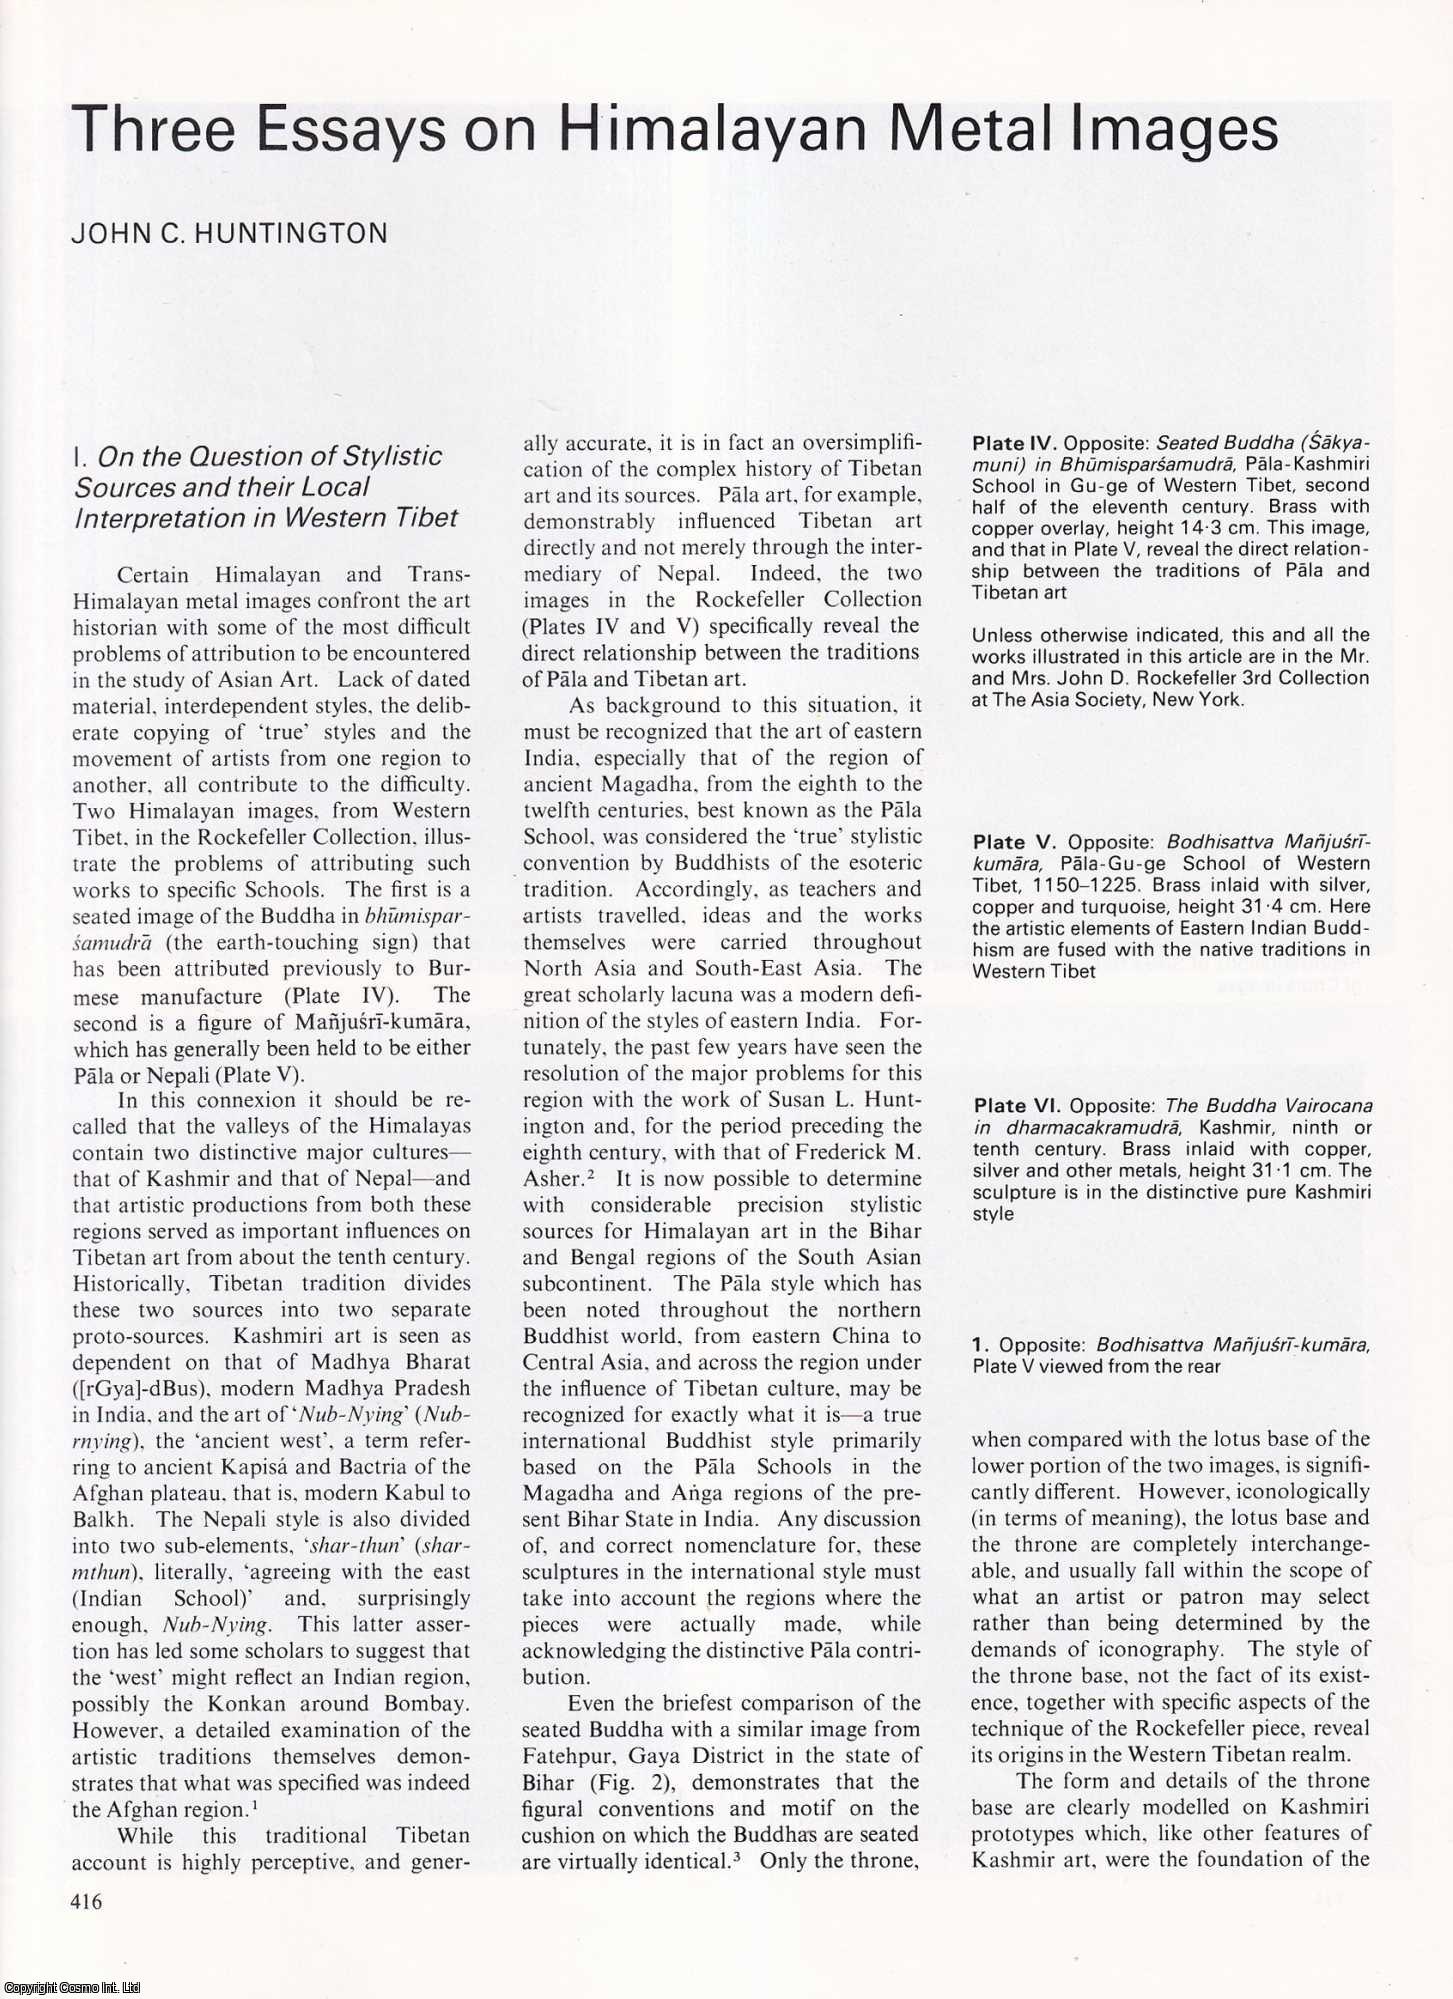 John C. Huntington - Three Essays on Himalayan Metal Images. An original article from Apollo, International Magazine of the Arts, 1983.